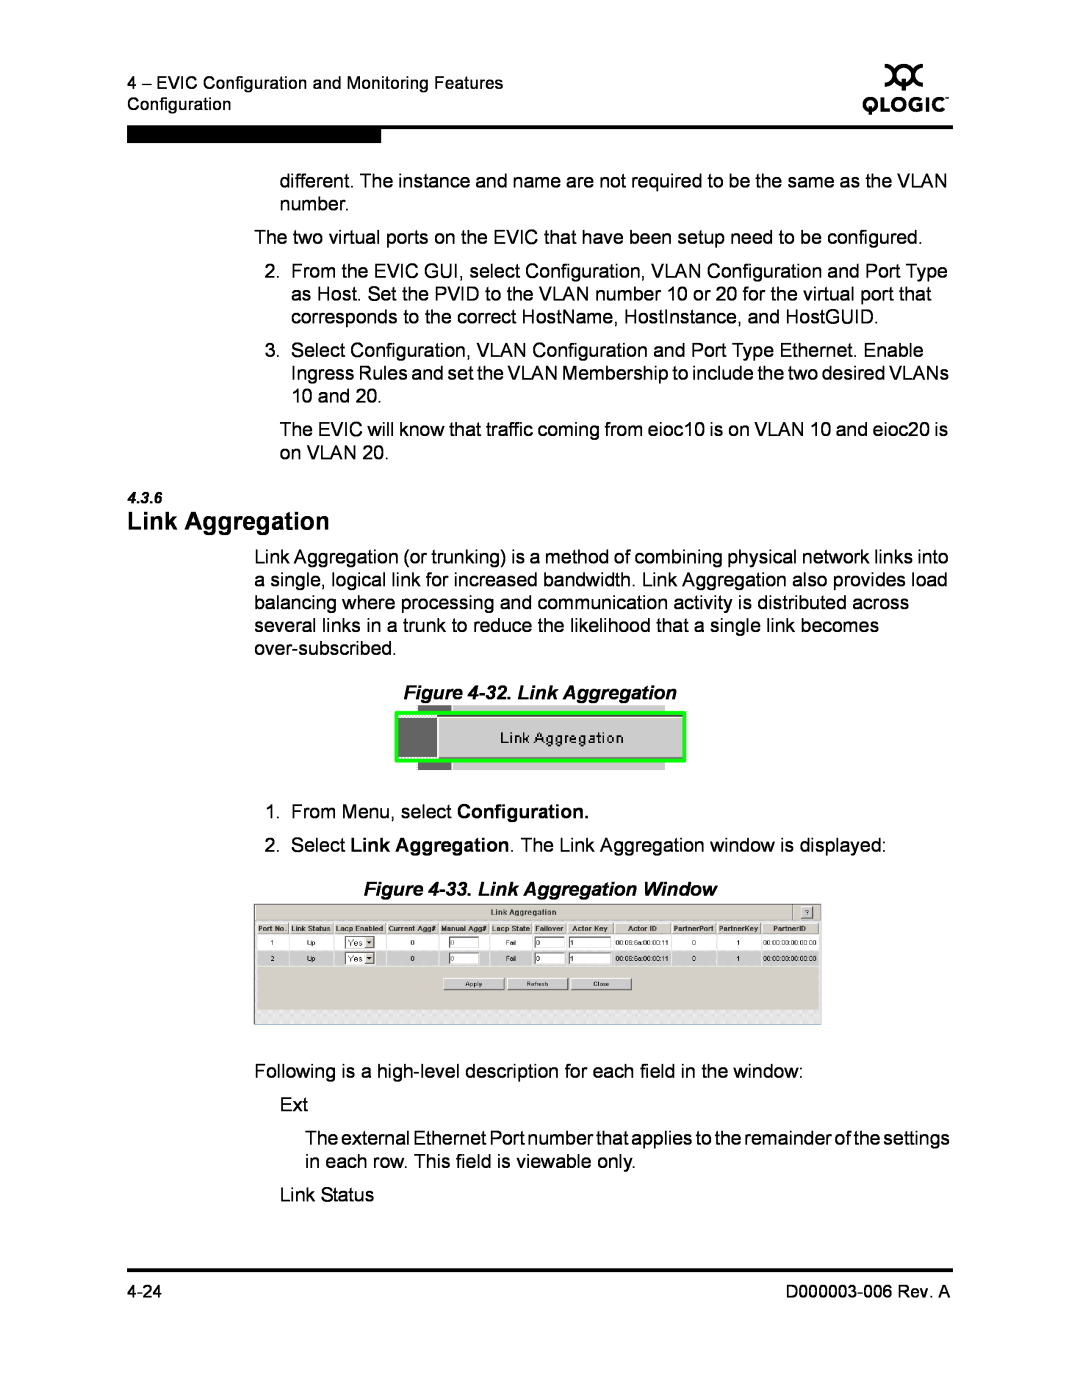 Q-Logic 9000 manual 32. Link Aggregation, 33. Link Aggregation Window 